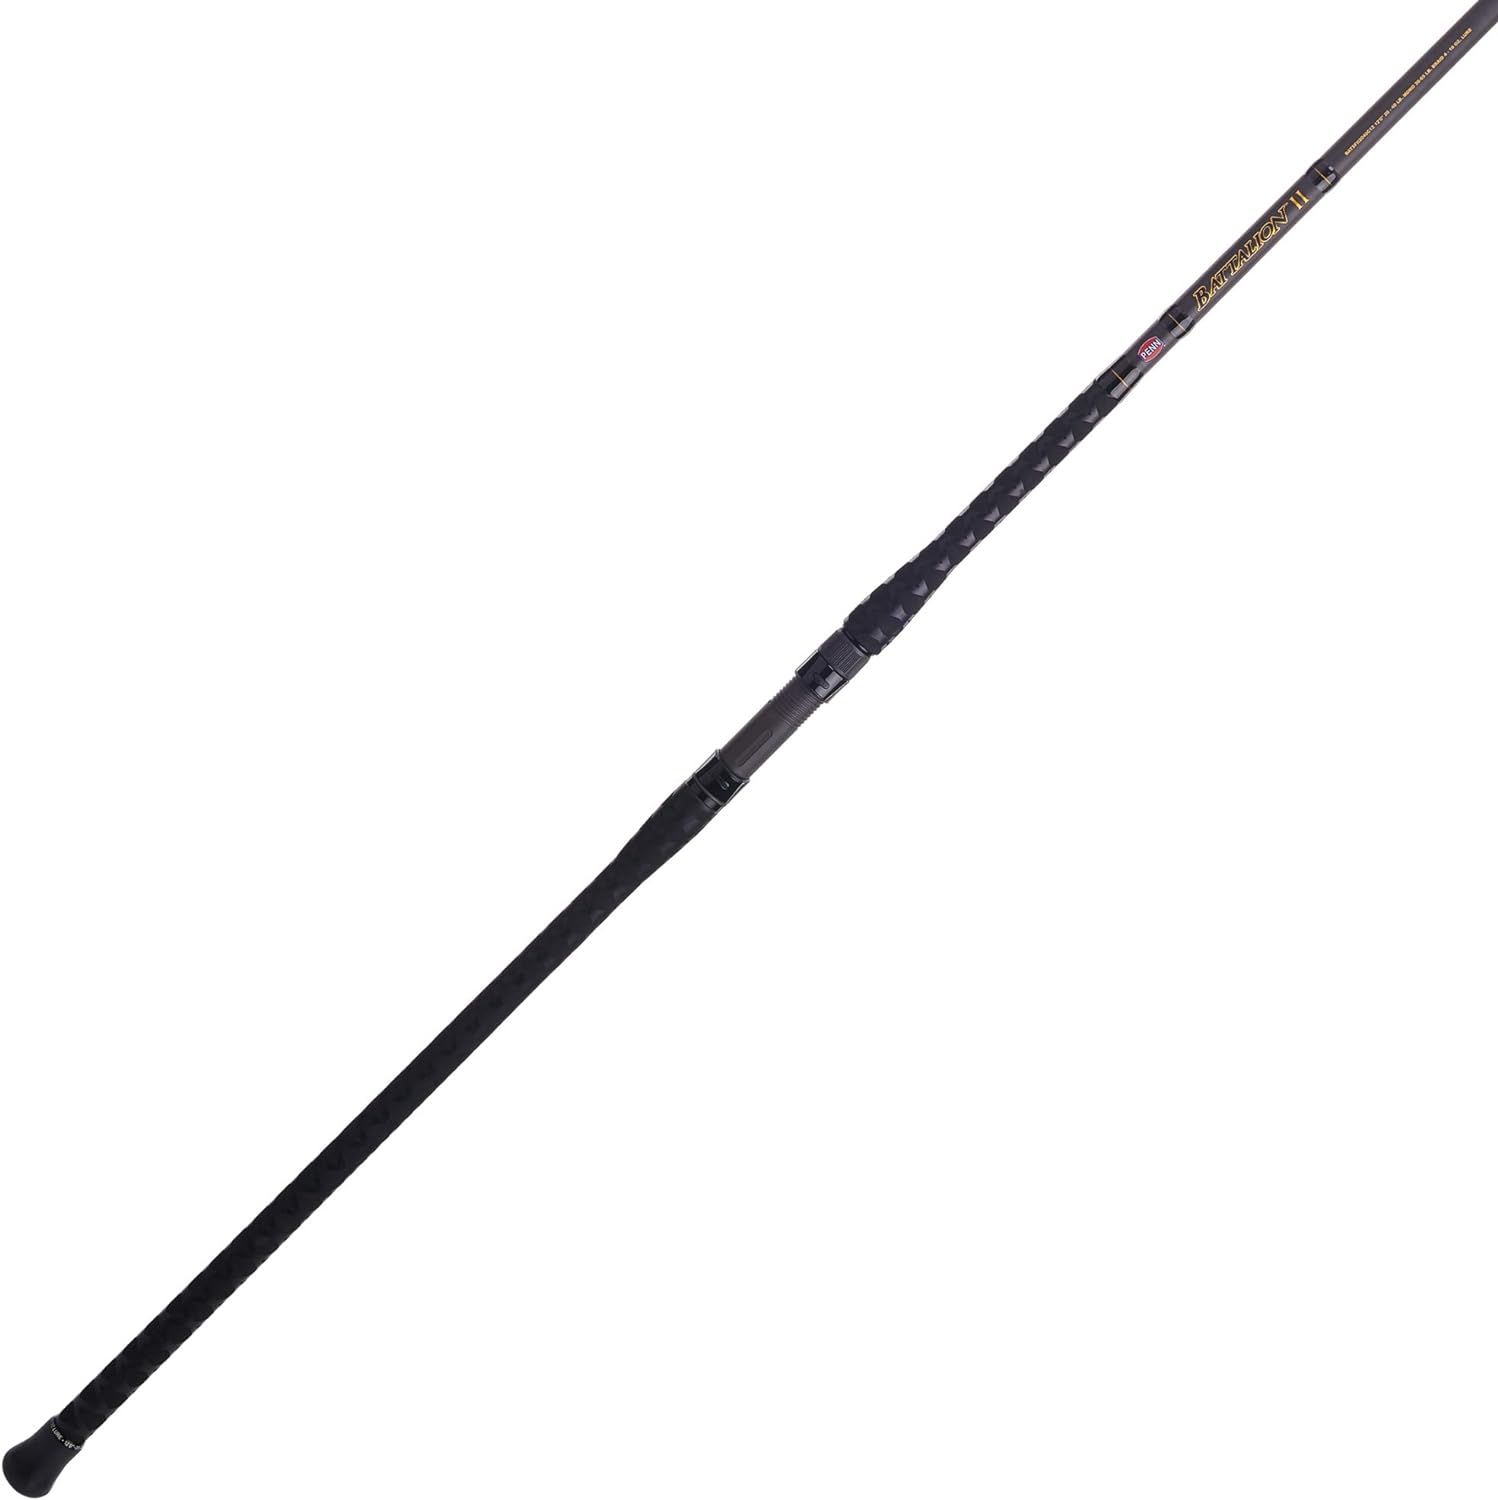 PENN 12’ Battalion II Surf Conventional Casting Rod, 25-50lb Line Rating, 2 Piece Graphite Composite Fishing Rod, Black/Gold